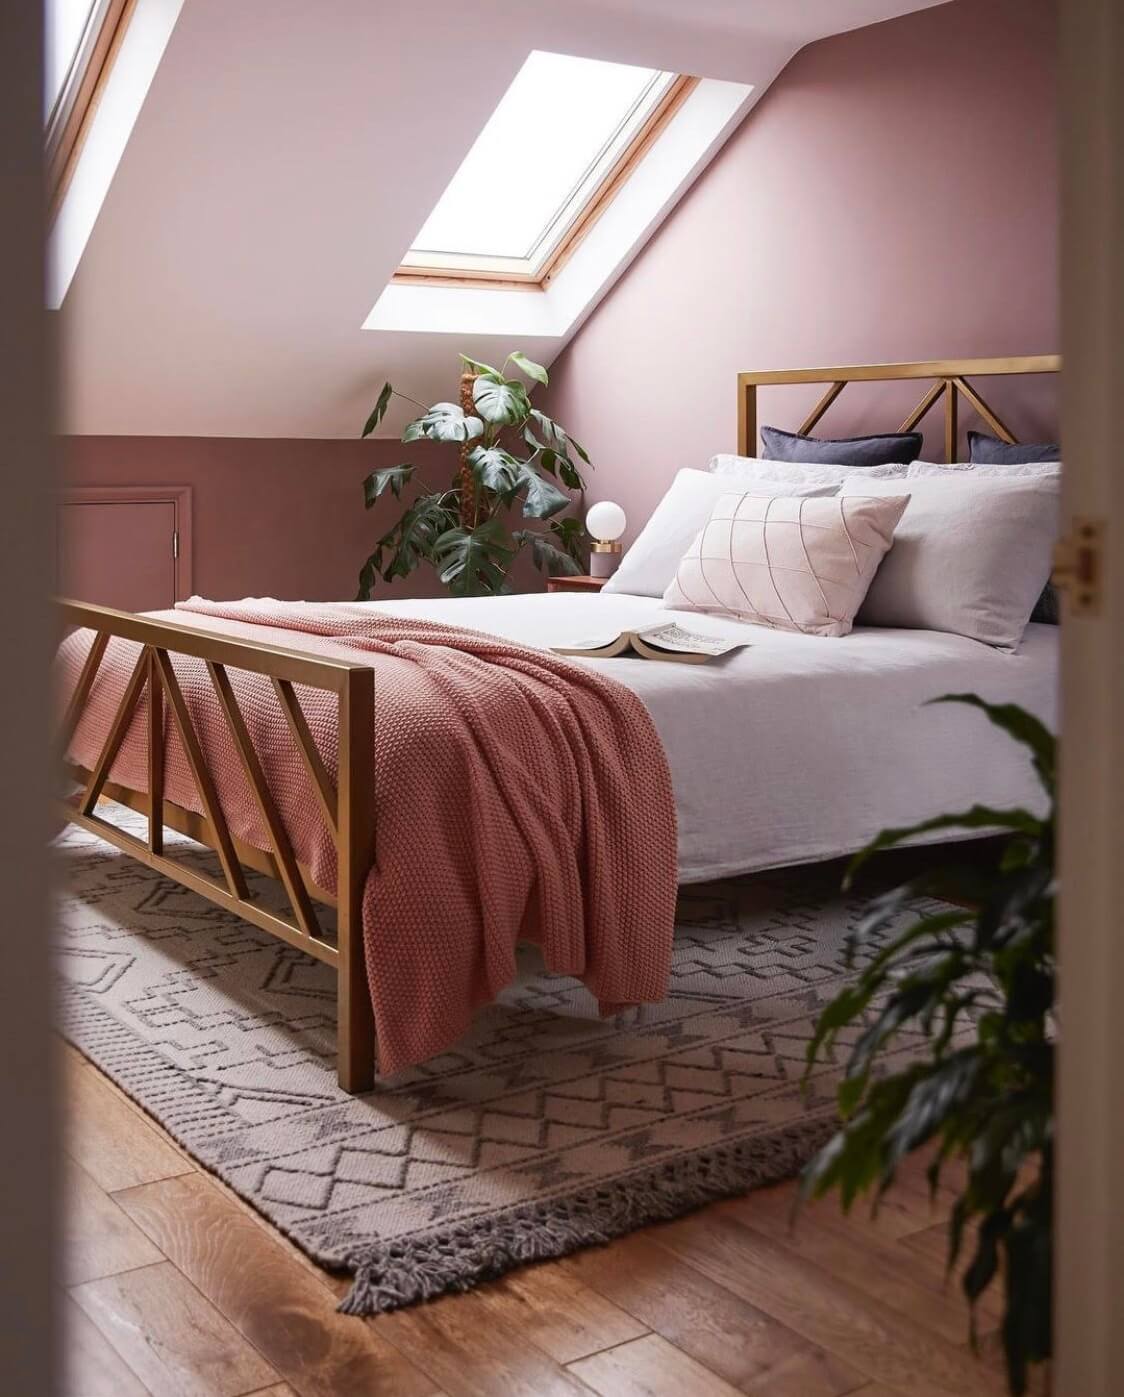 sulking-room-pink-farrow-ball-attic-bedroom-slanted-ceiling-warm-bedroom-colors-nordroom